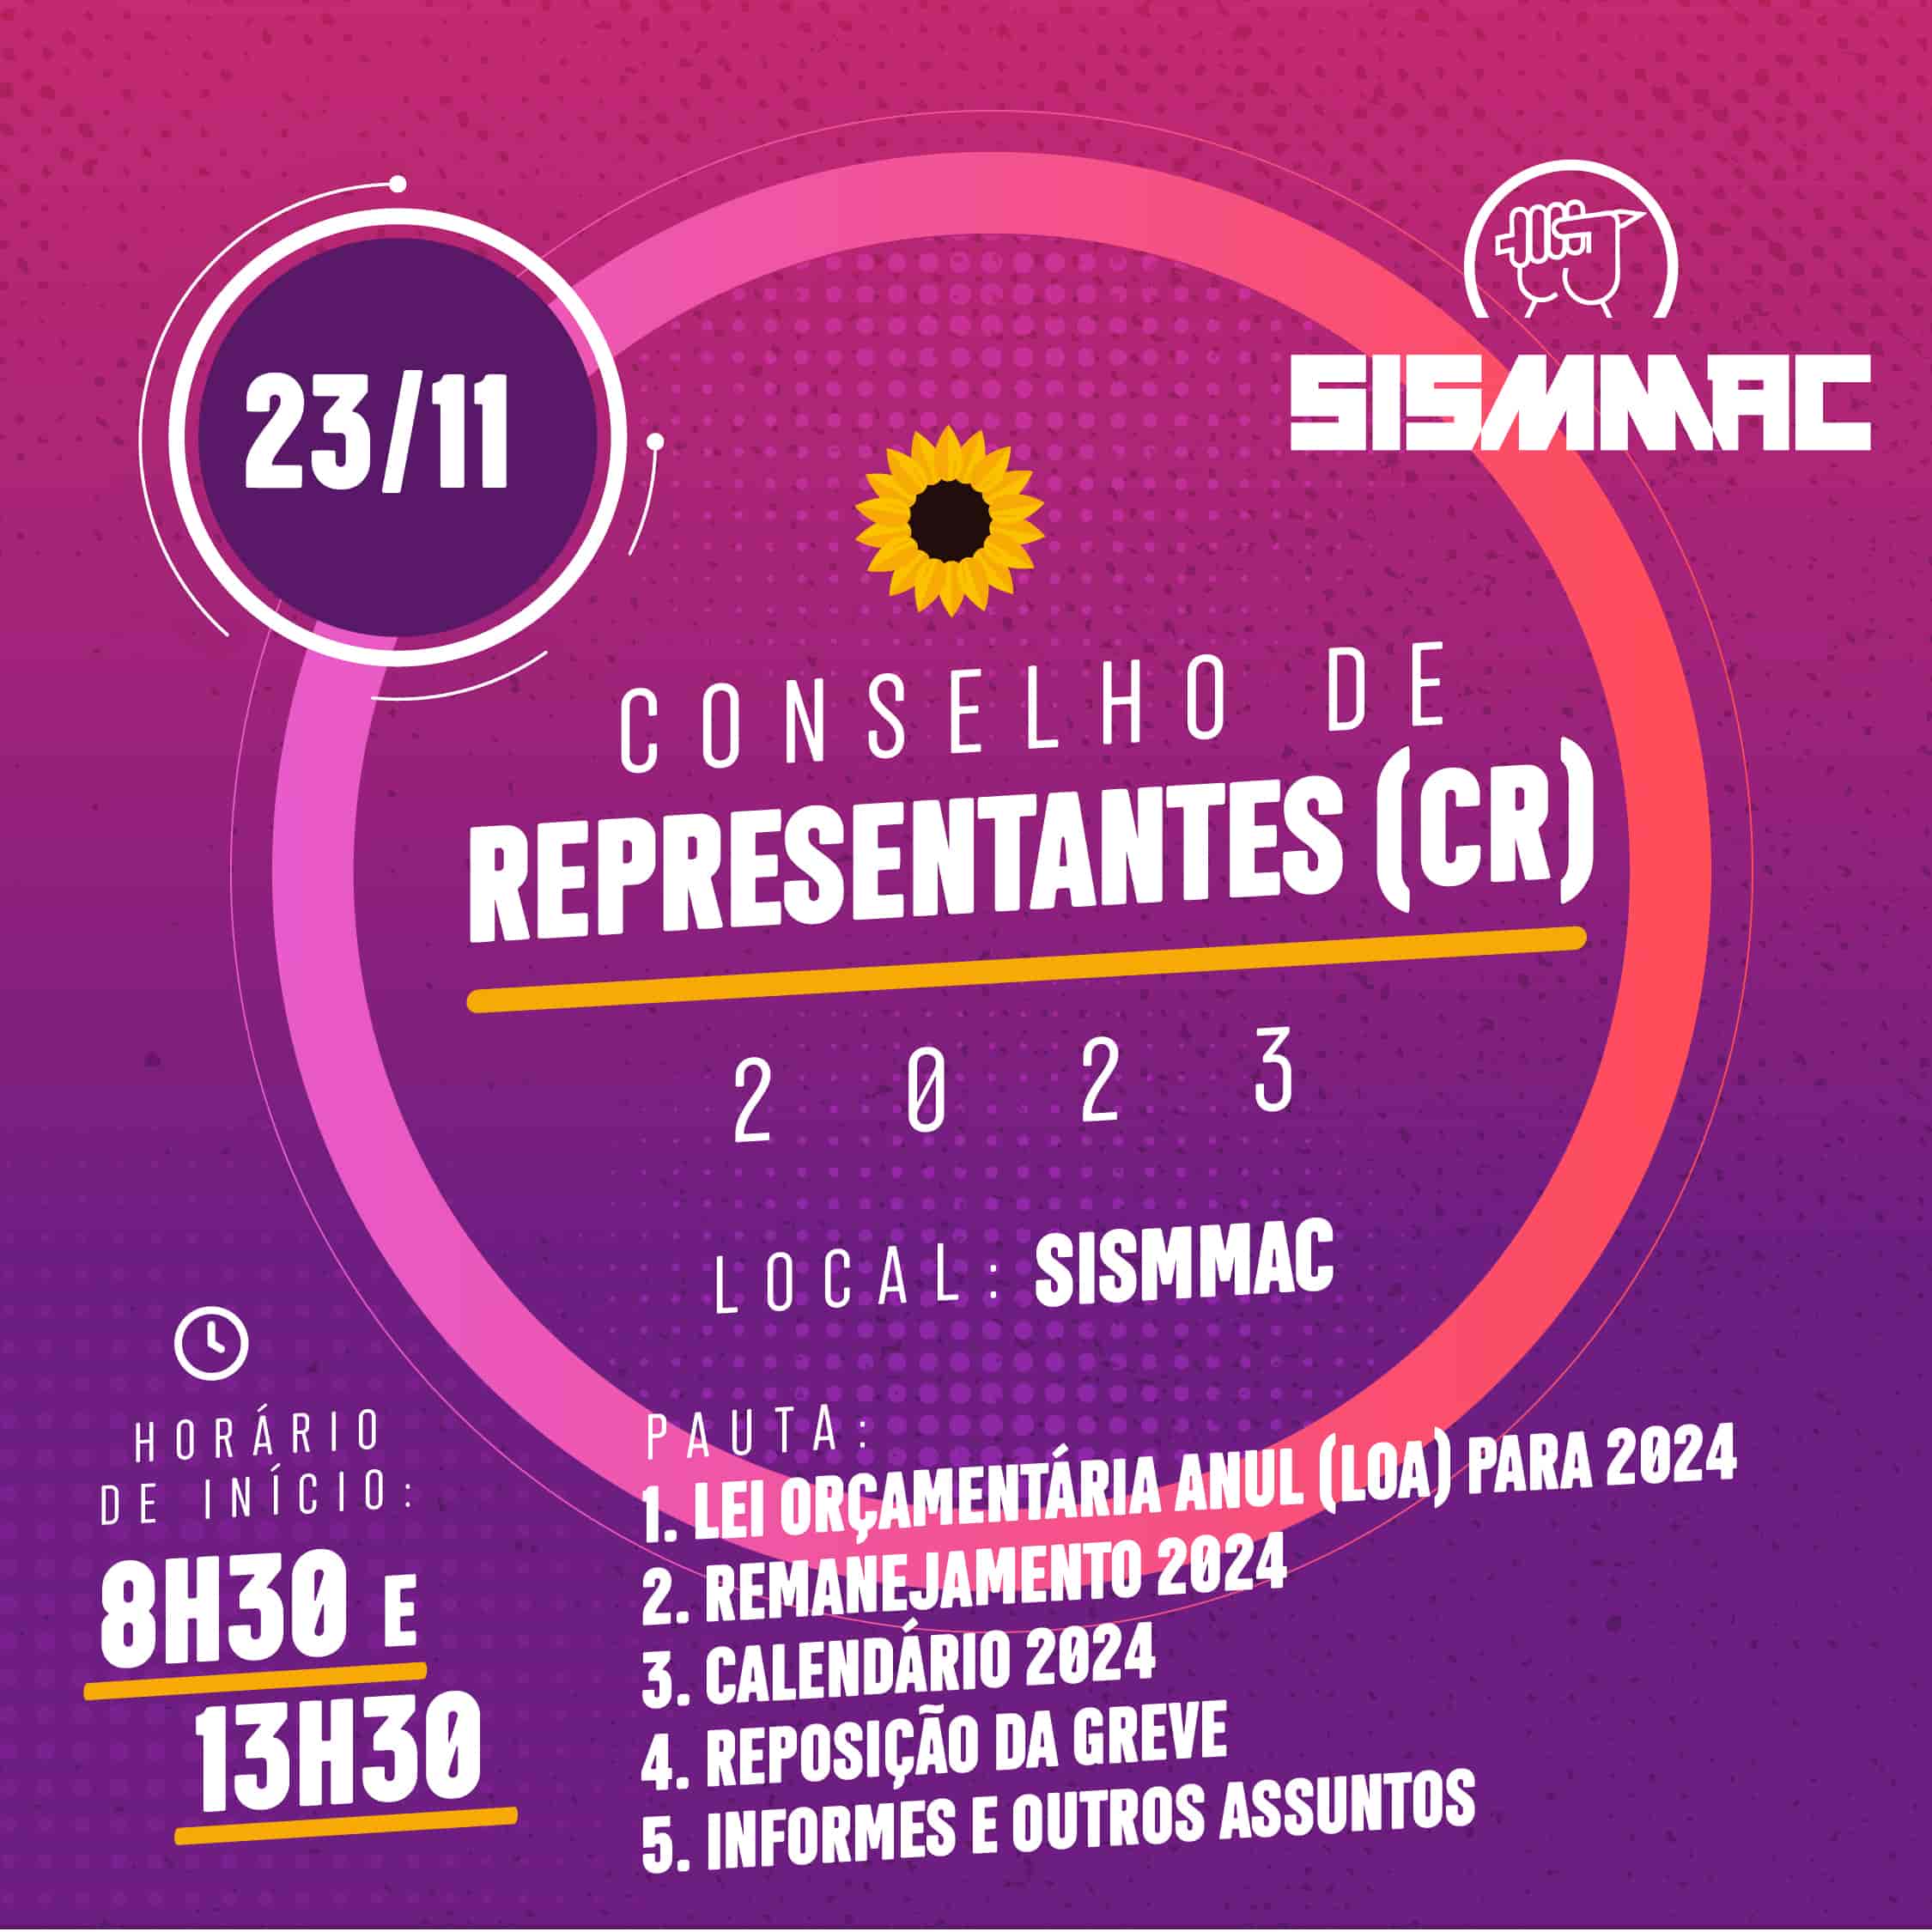 Posts-11-CONSELHO DE REPRESENTANTES (CR) 2023_POST CR SISMMAC (1)